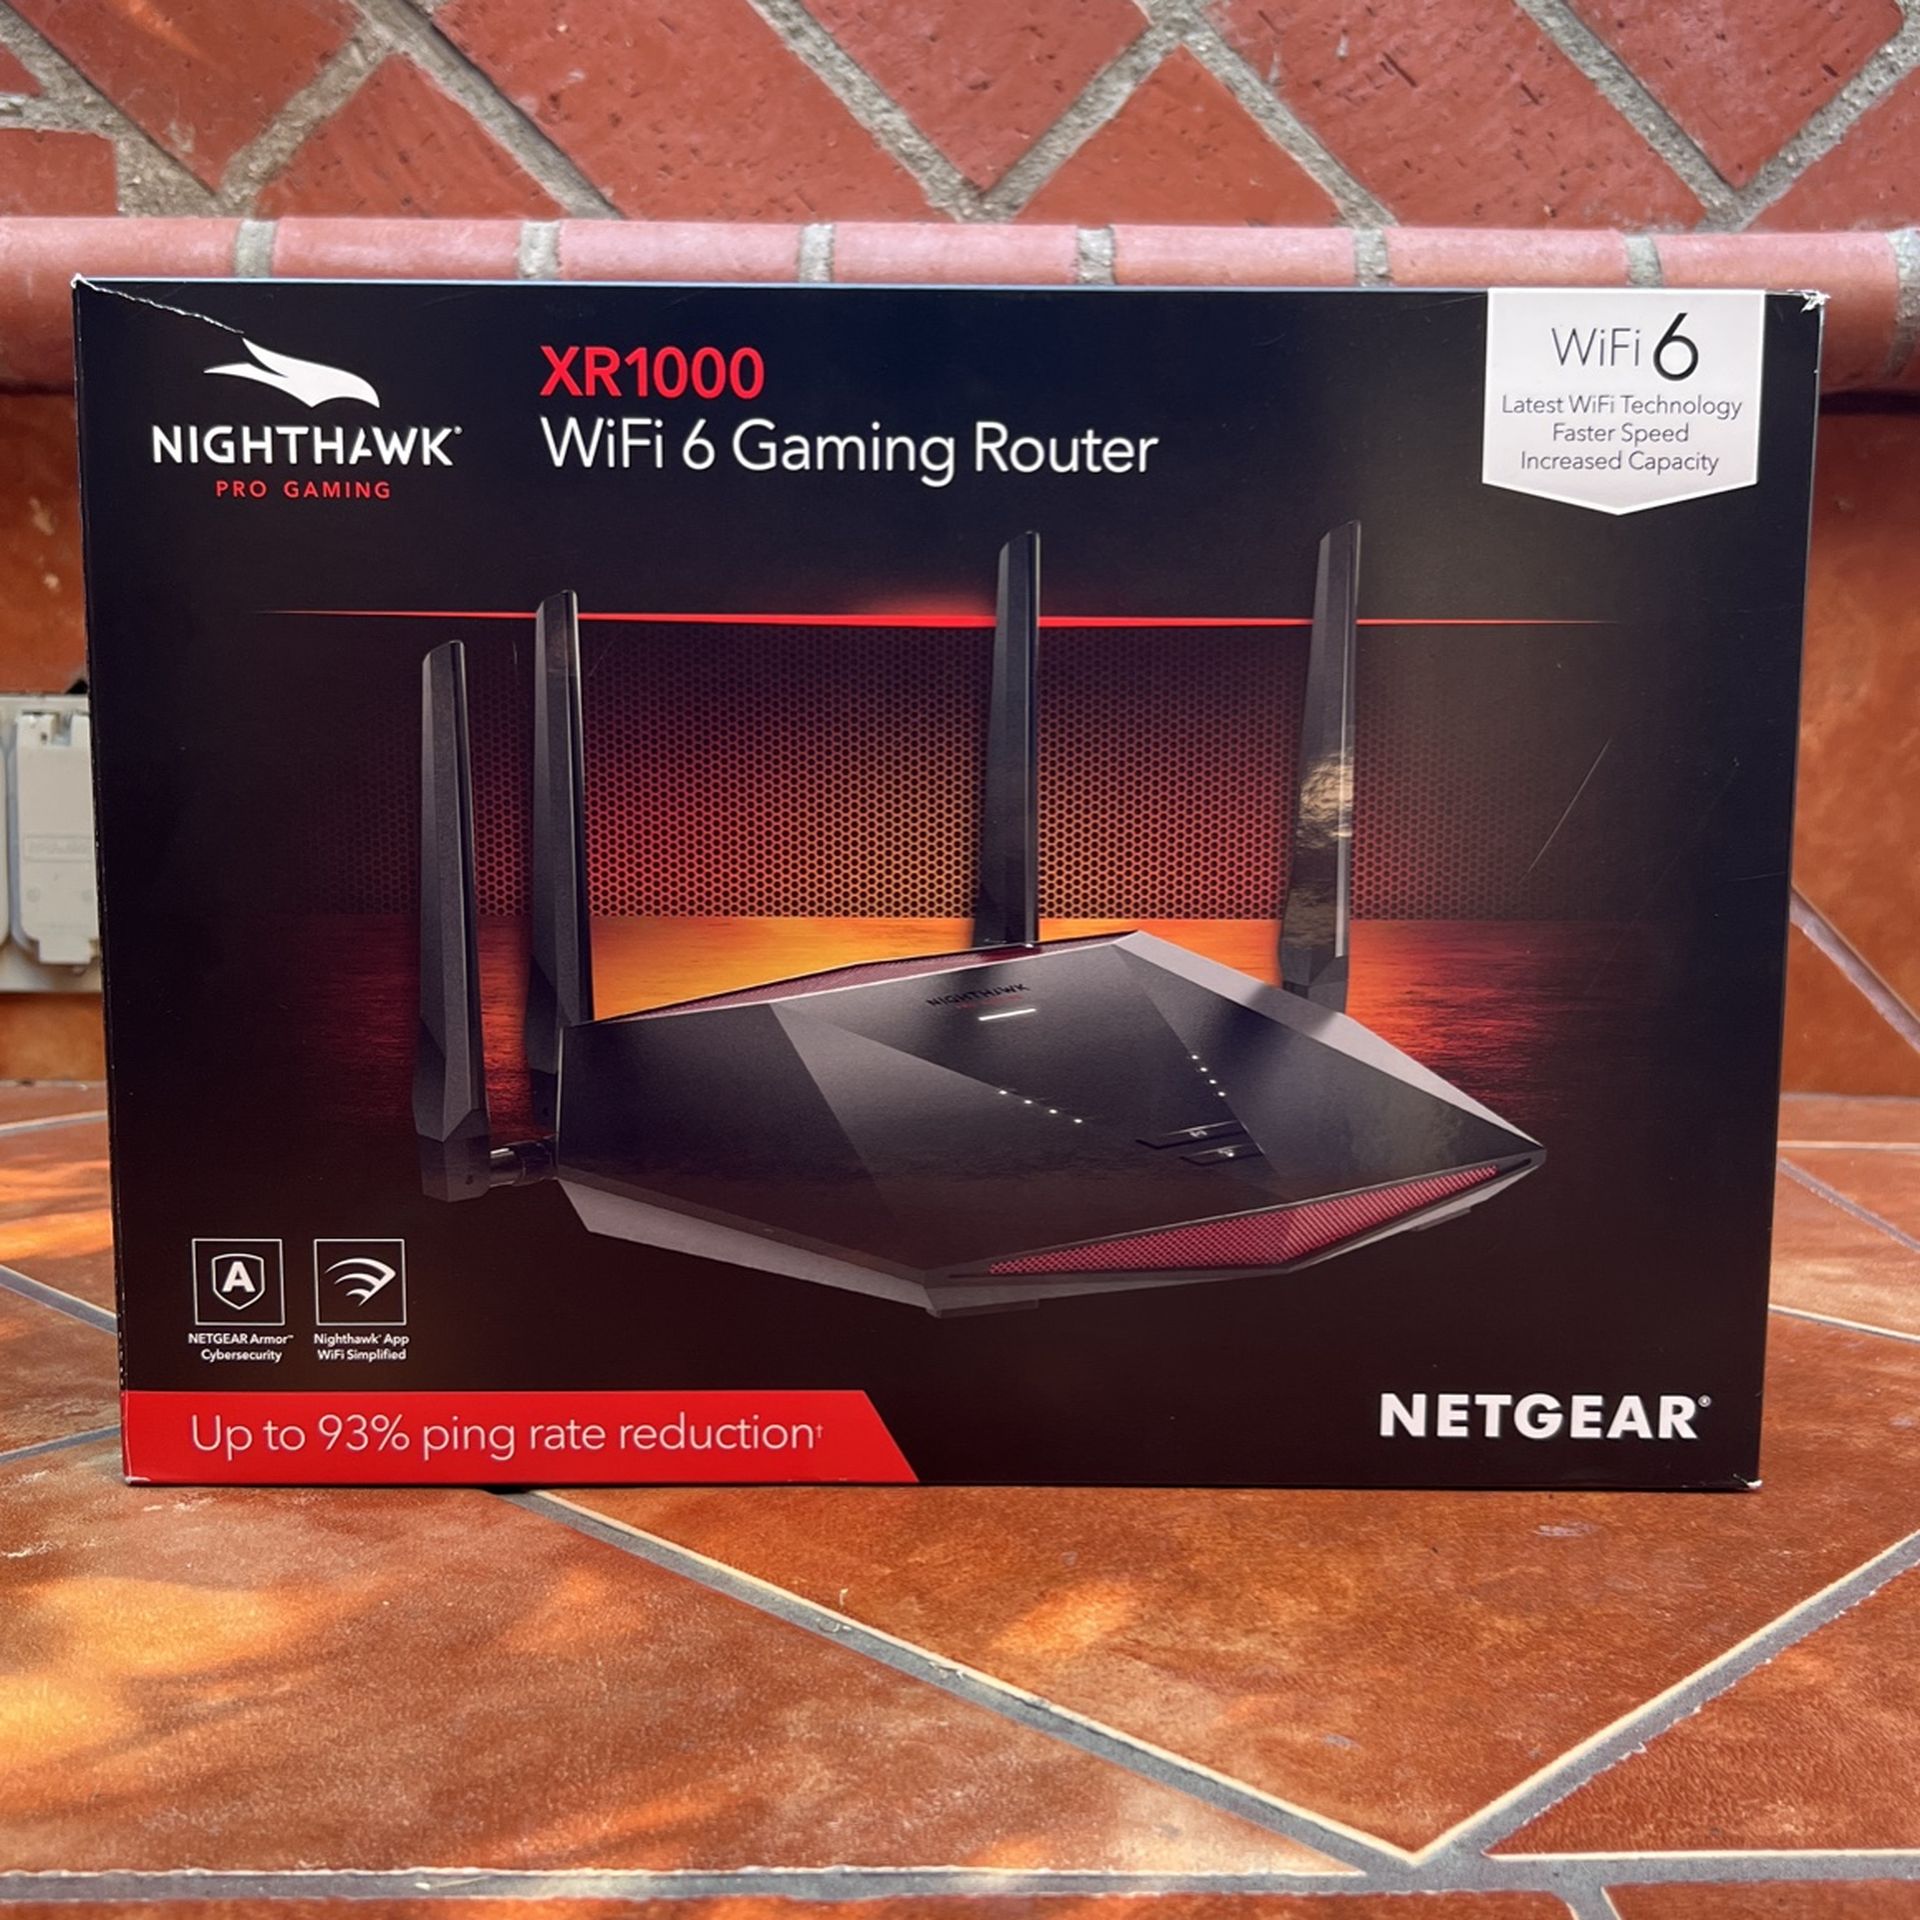 Nighthawk XR1000 WiFi 6 Gaming Router